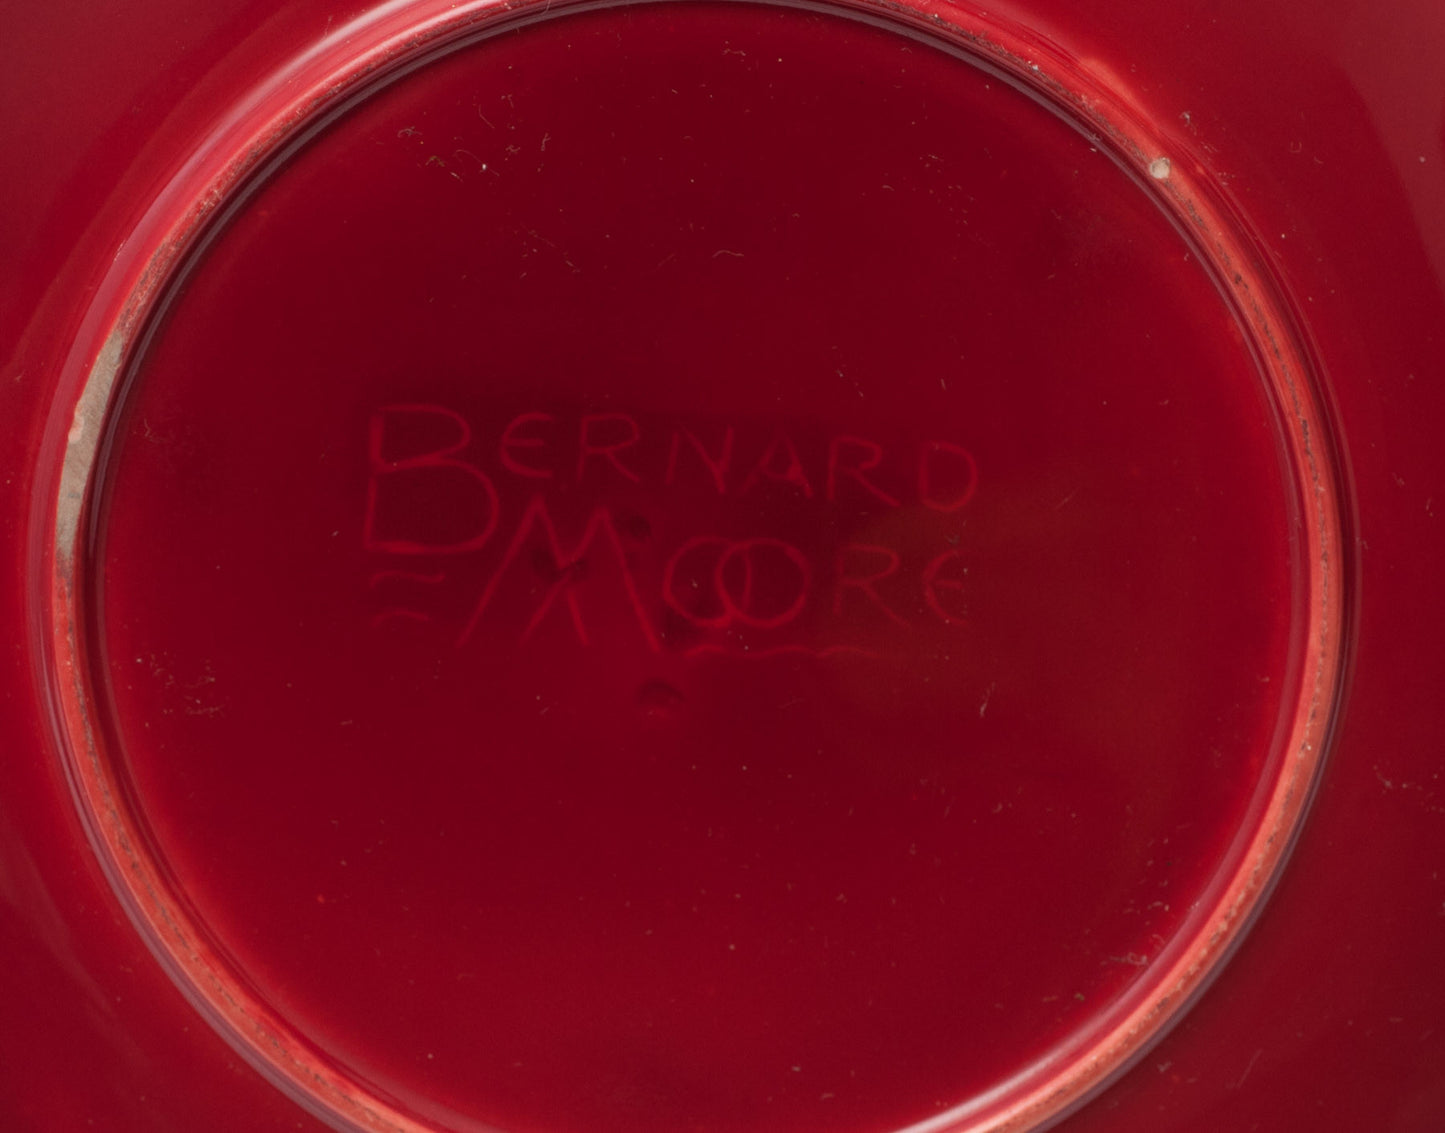 Signed Antique Bernard Moore Red Flambe & Crystalline Glaze Art Pottery Plate D (Code 0618)